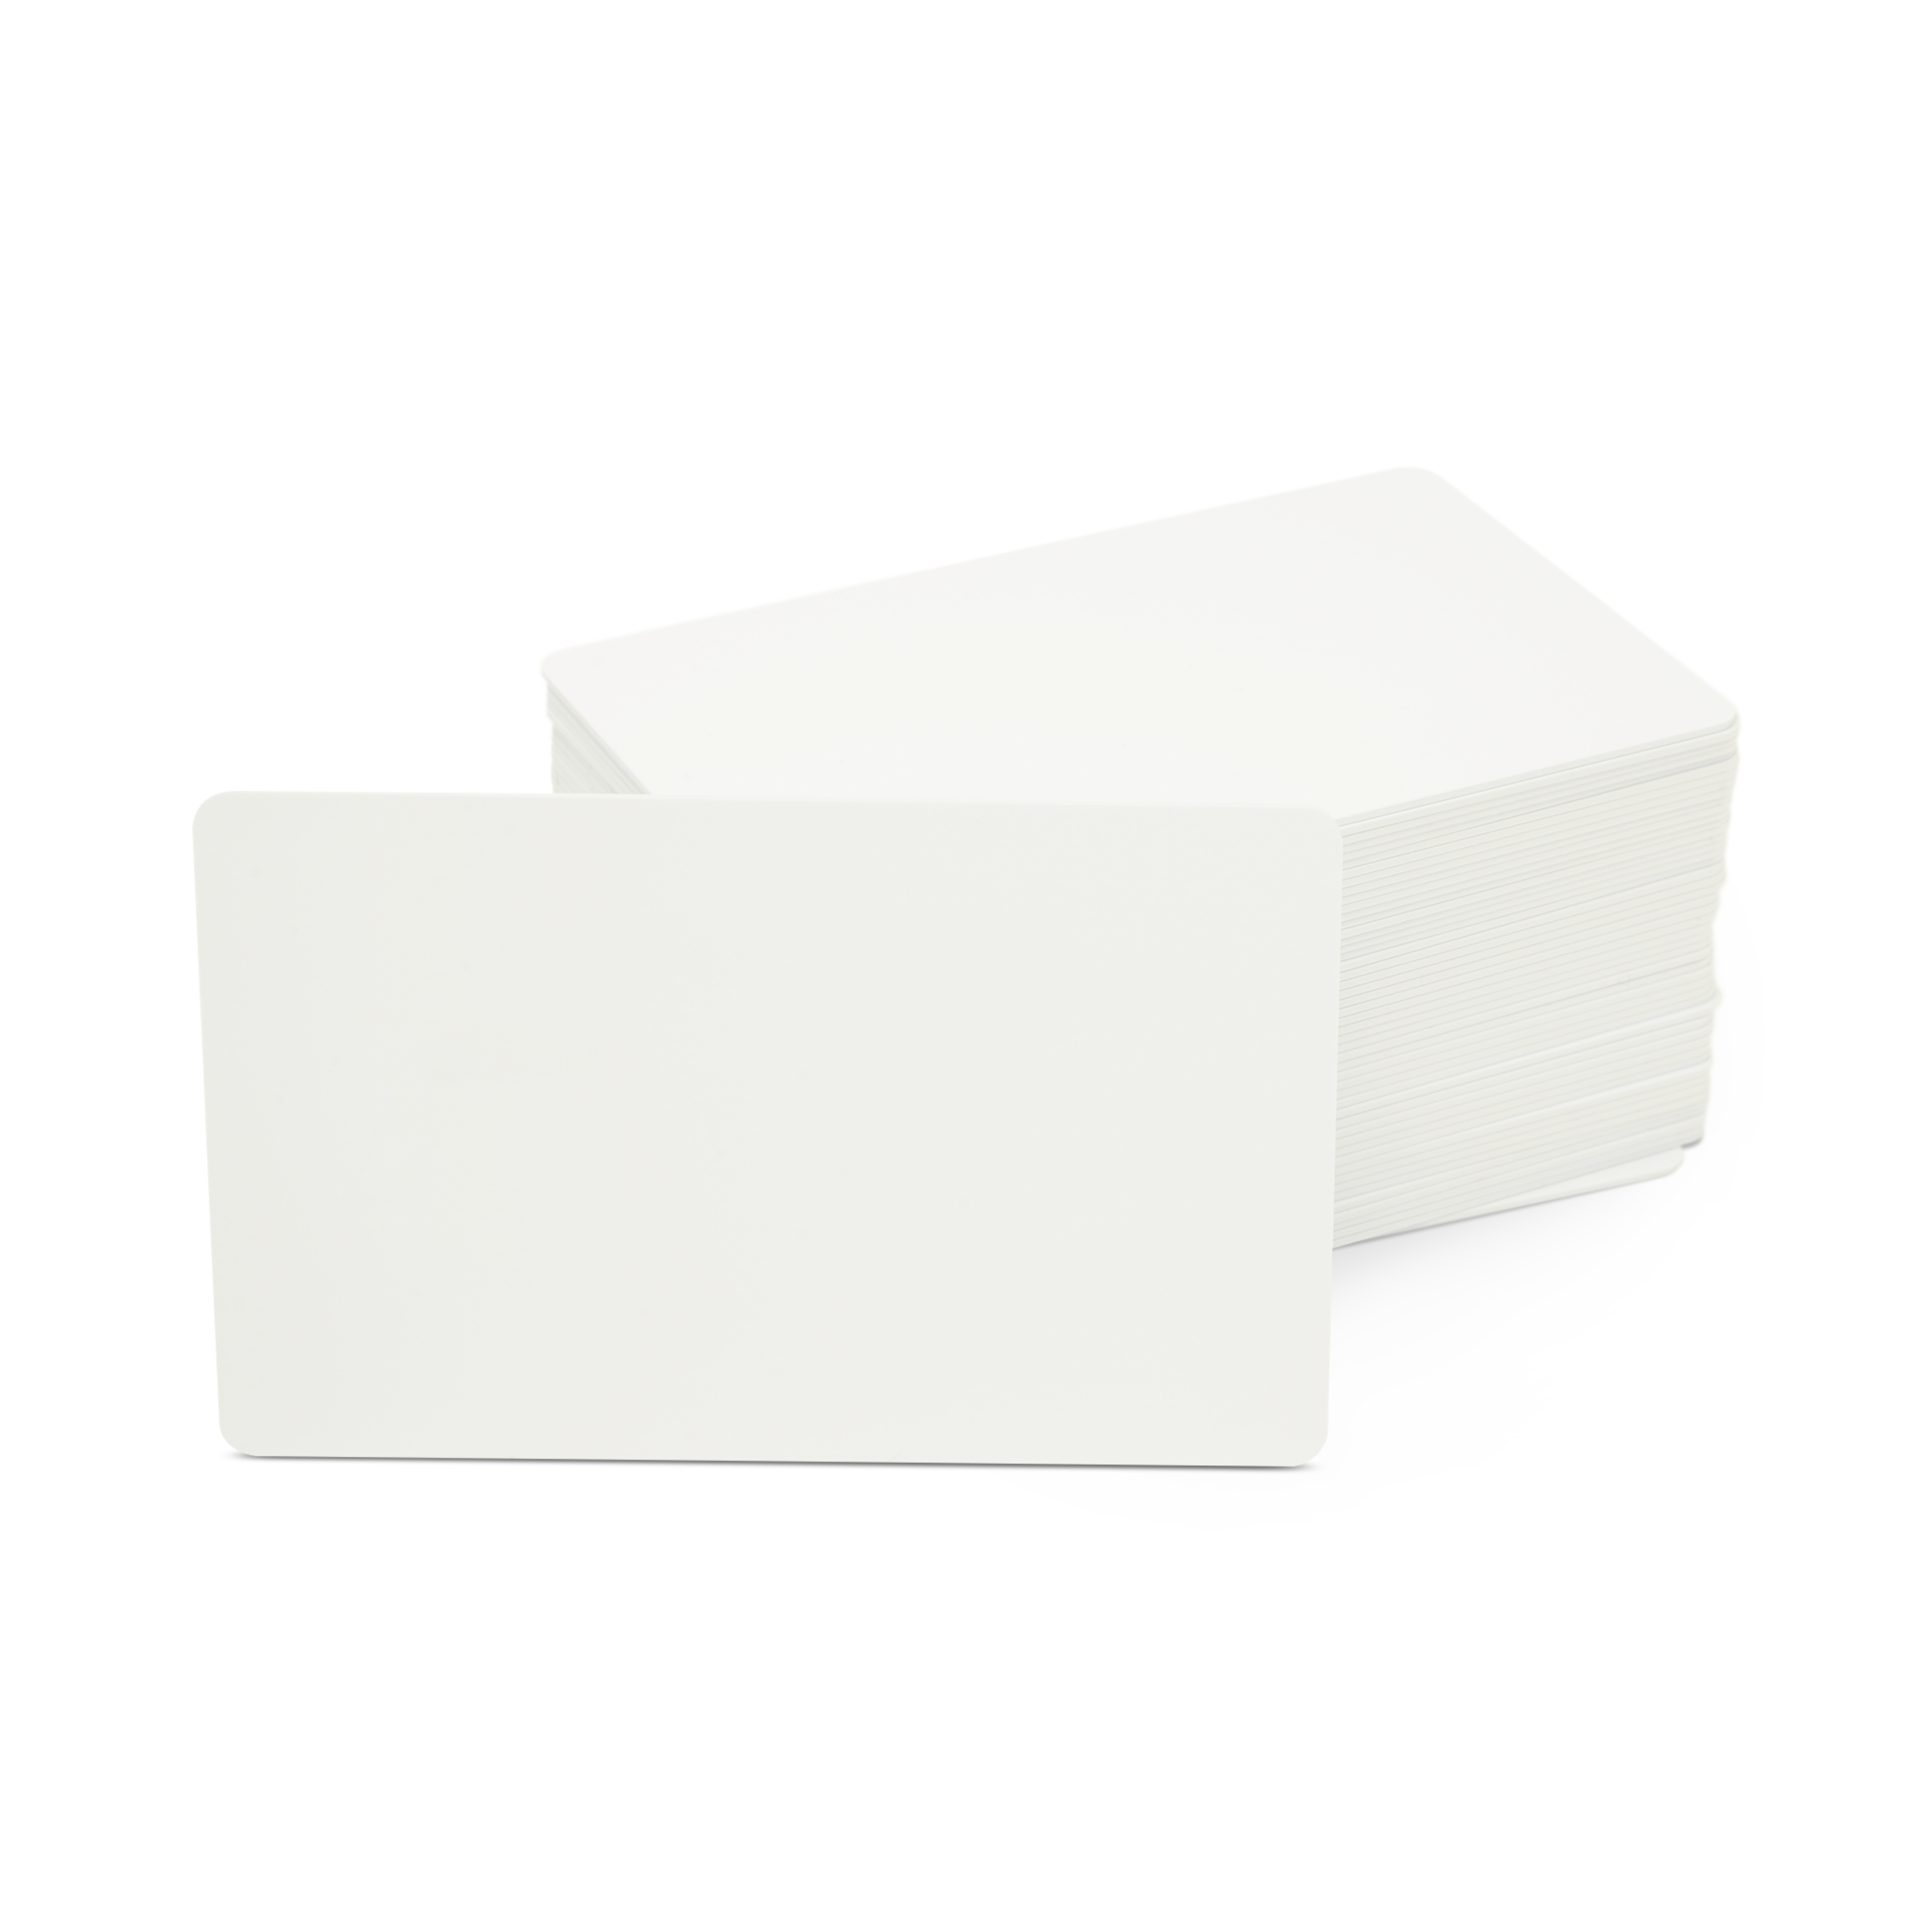 NFC Card PVC - 85,6 x 54 mm - NTAG215 - 540 Byte - white 